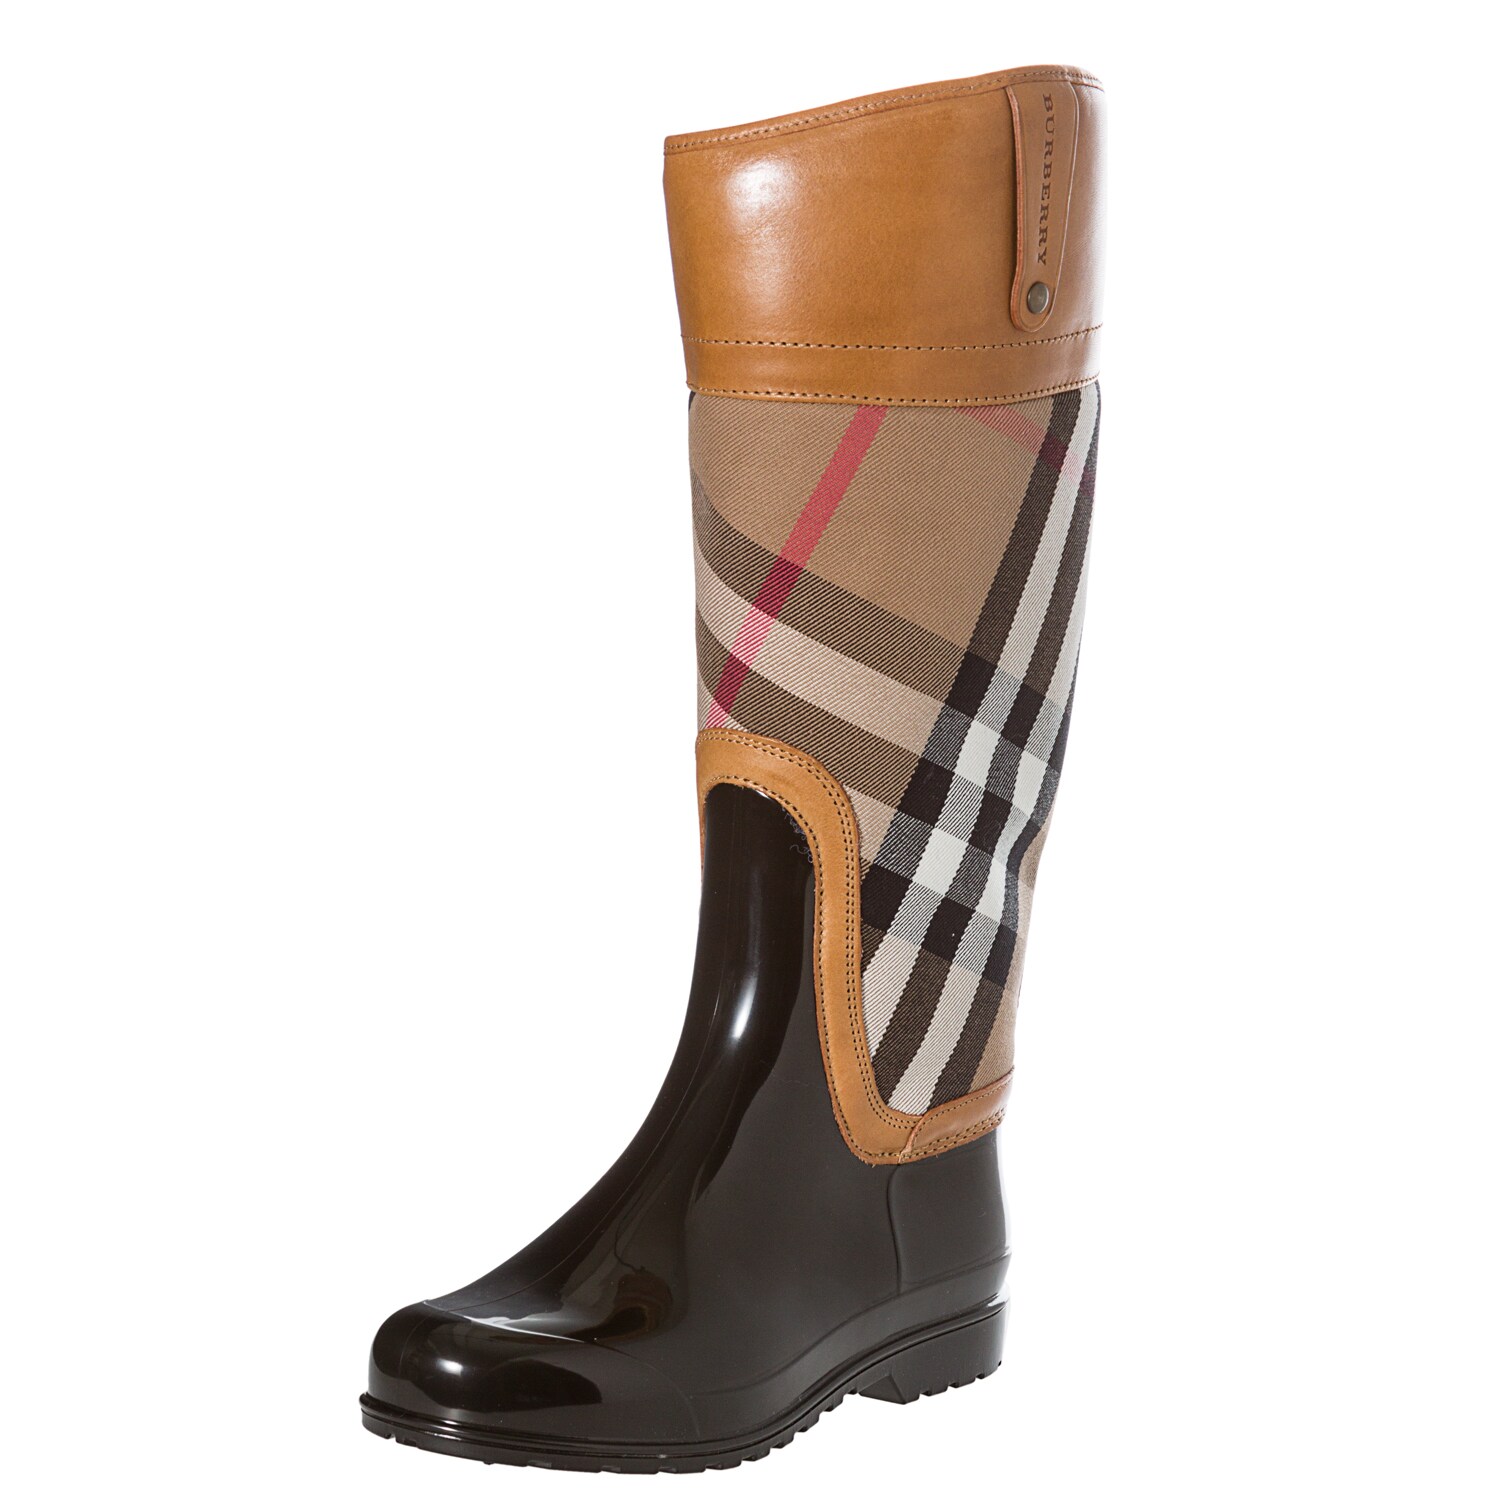 burberry women's rain boots